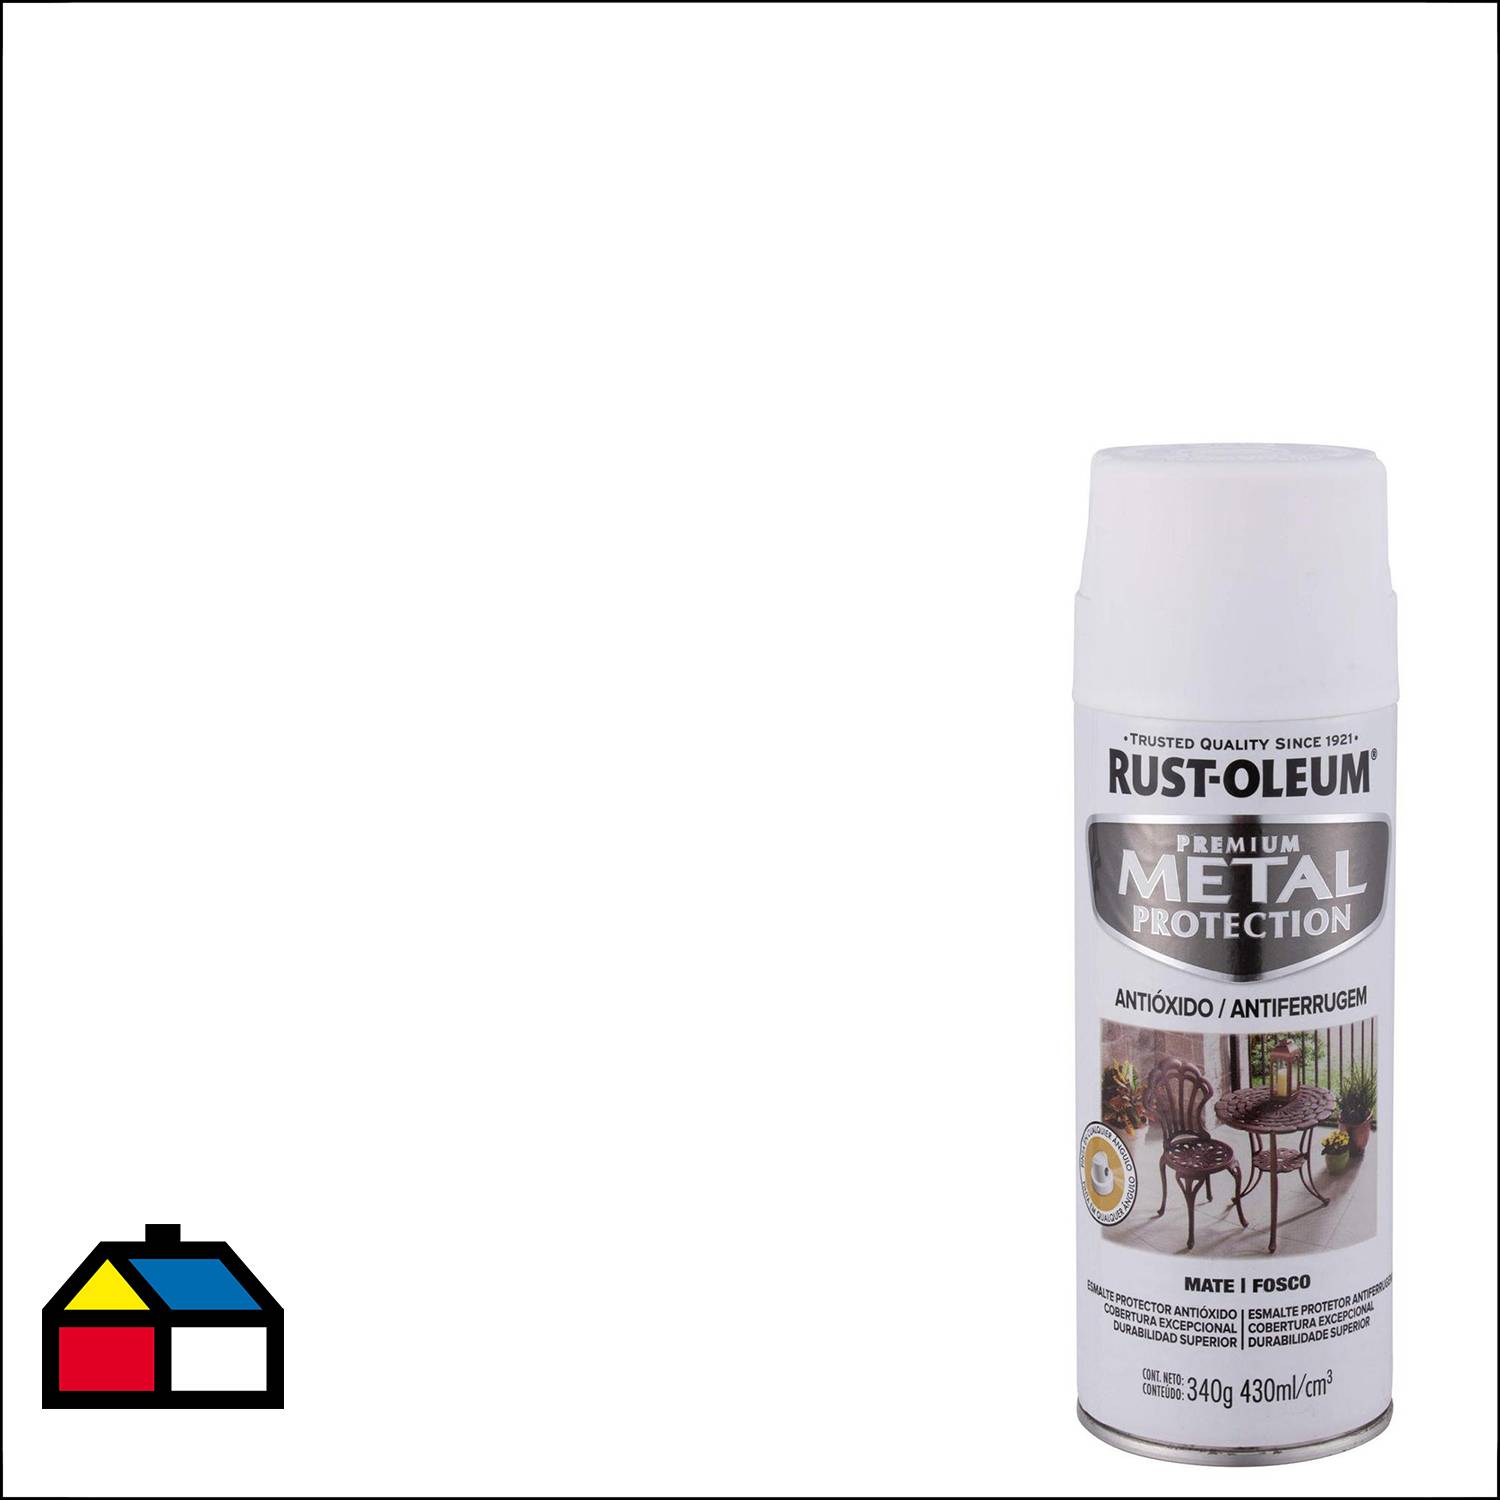 Pintura spray 430 ml Premium metal protection blanco brillante Rust-Oleum